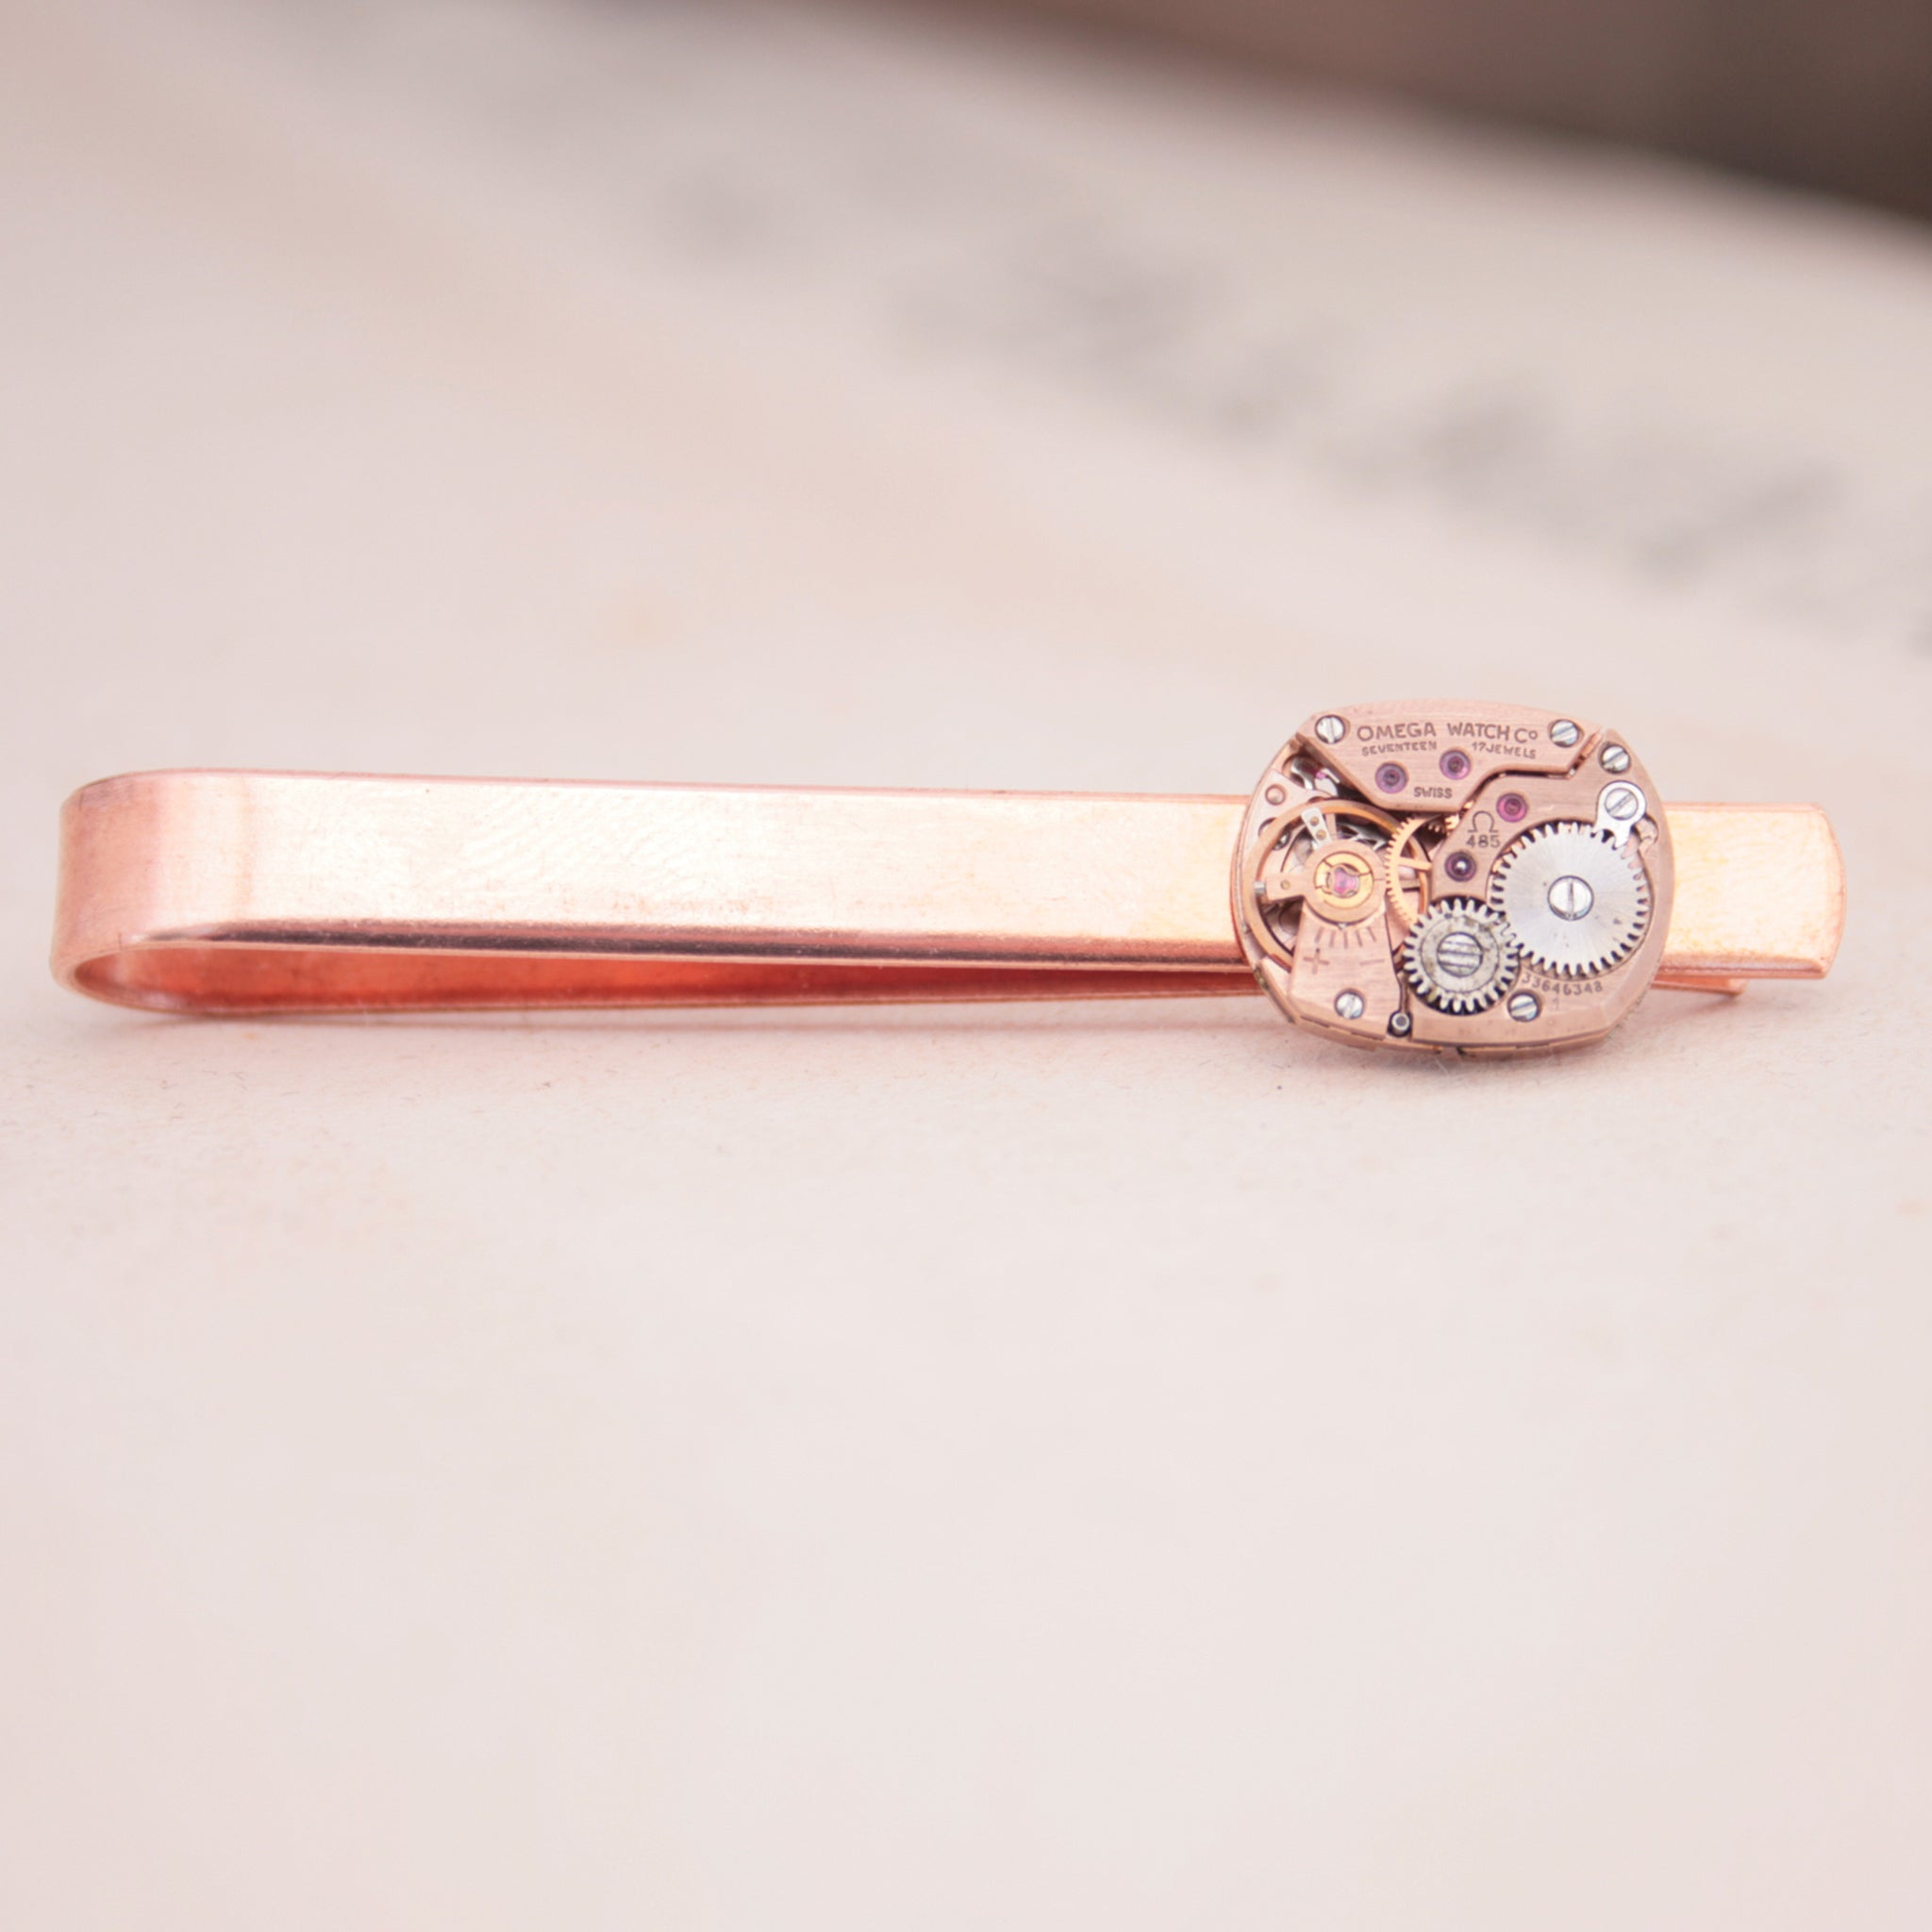 Omega Watch Copper Tie Clip